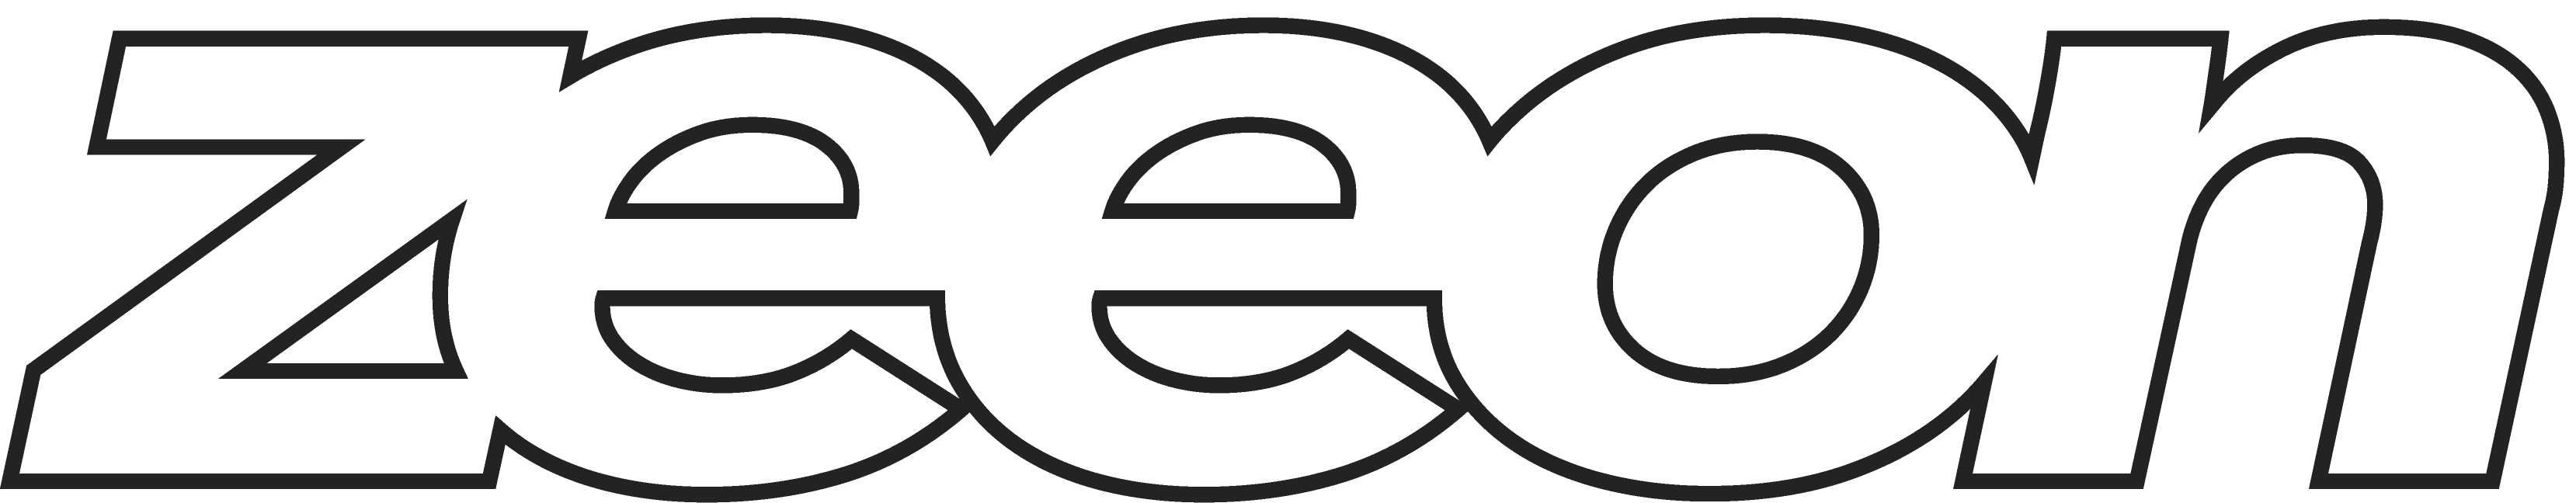 Zeoon logo